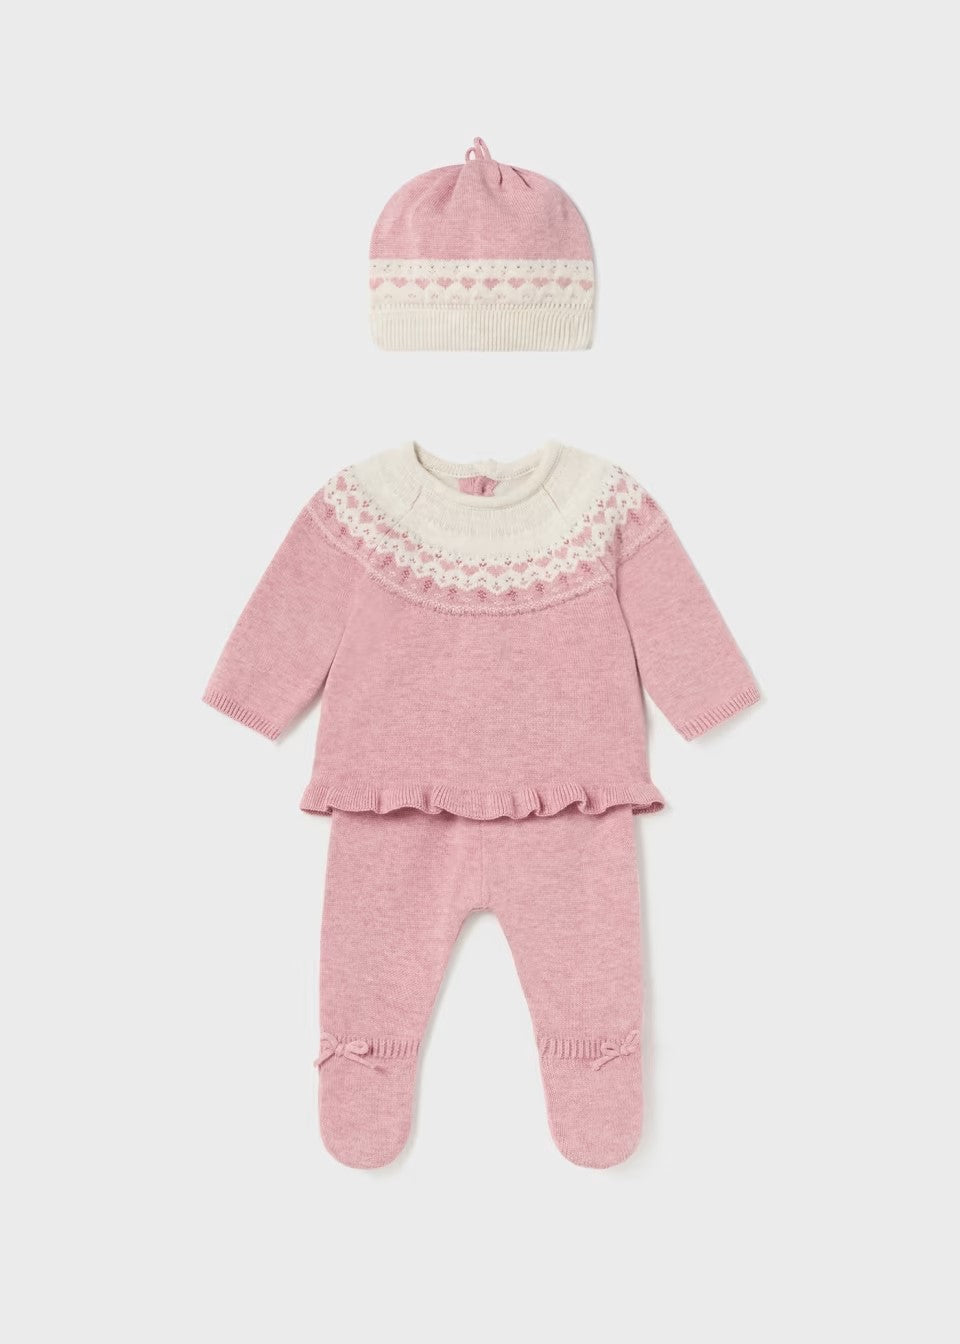 2504 - Infant 3pc Sweater Set - Pink